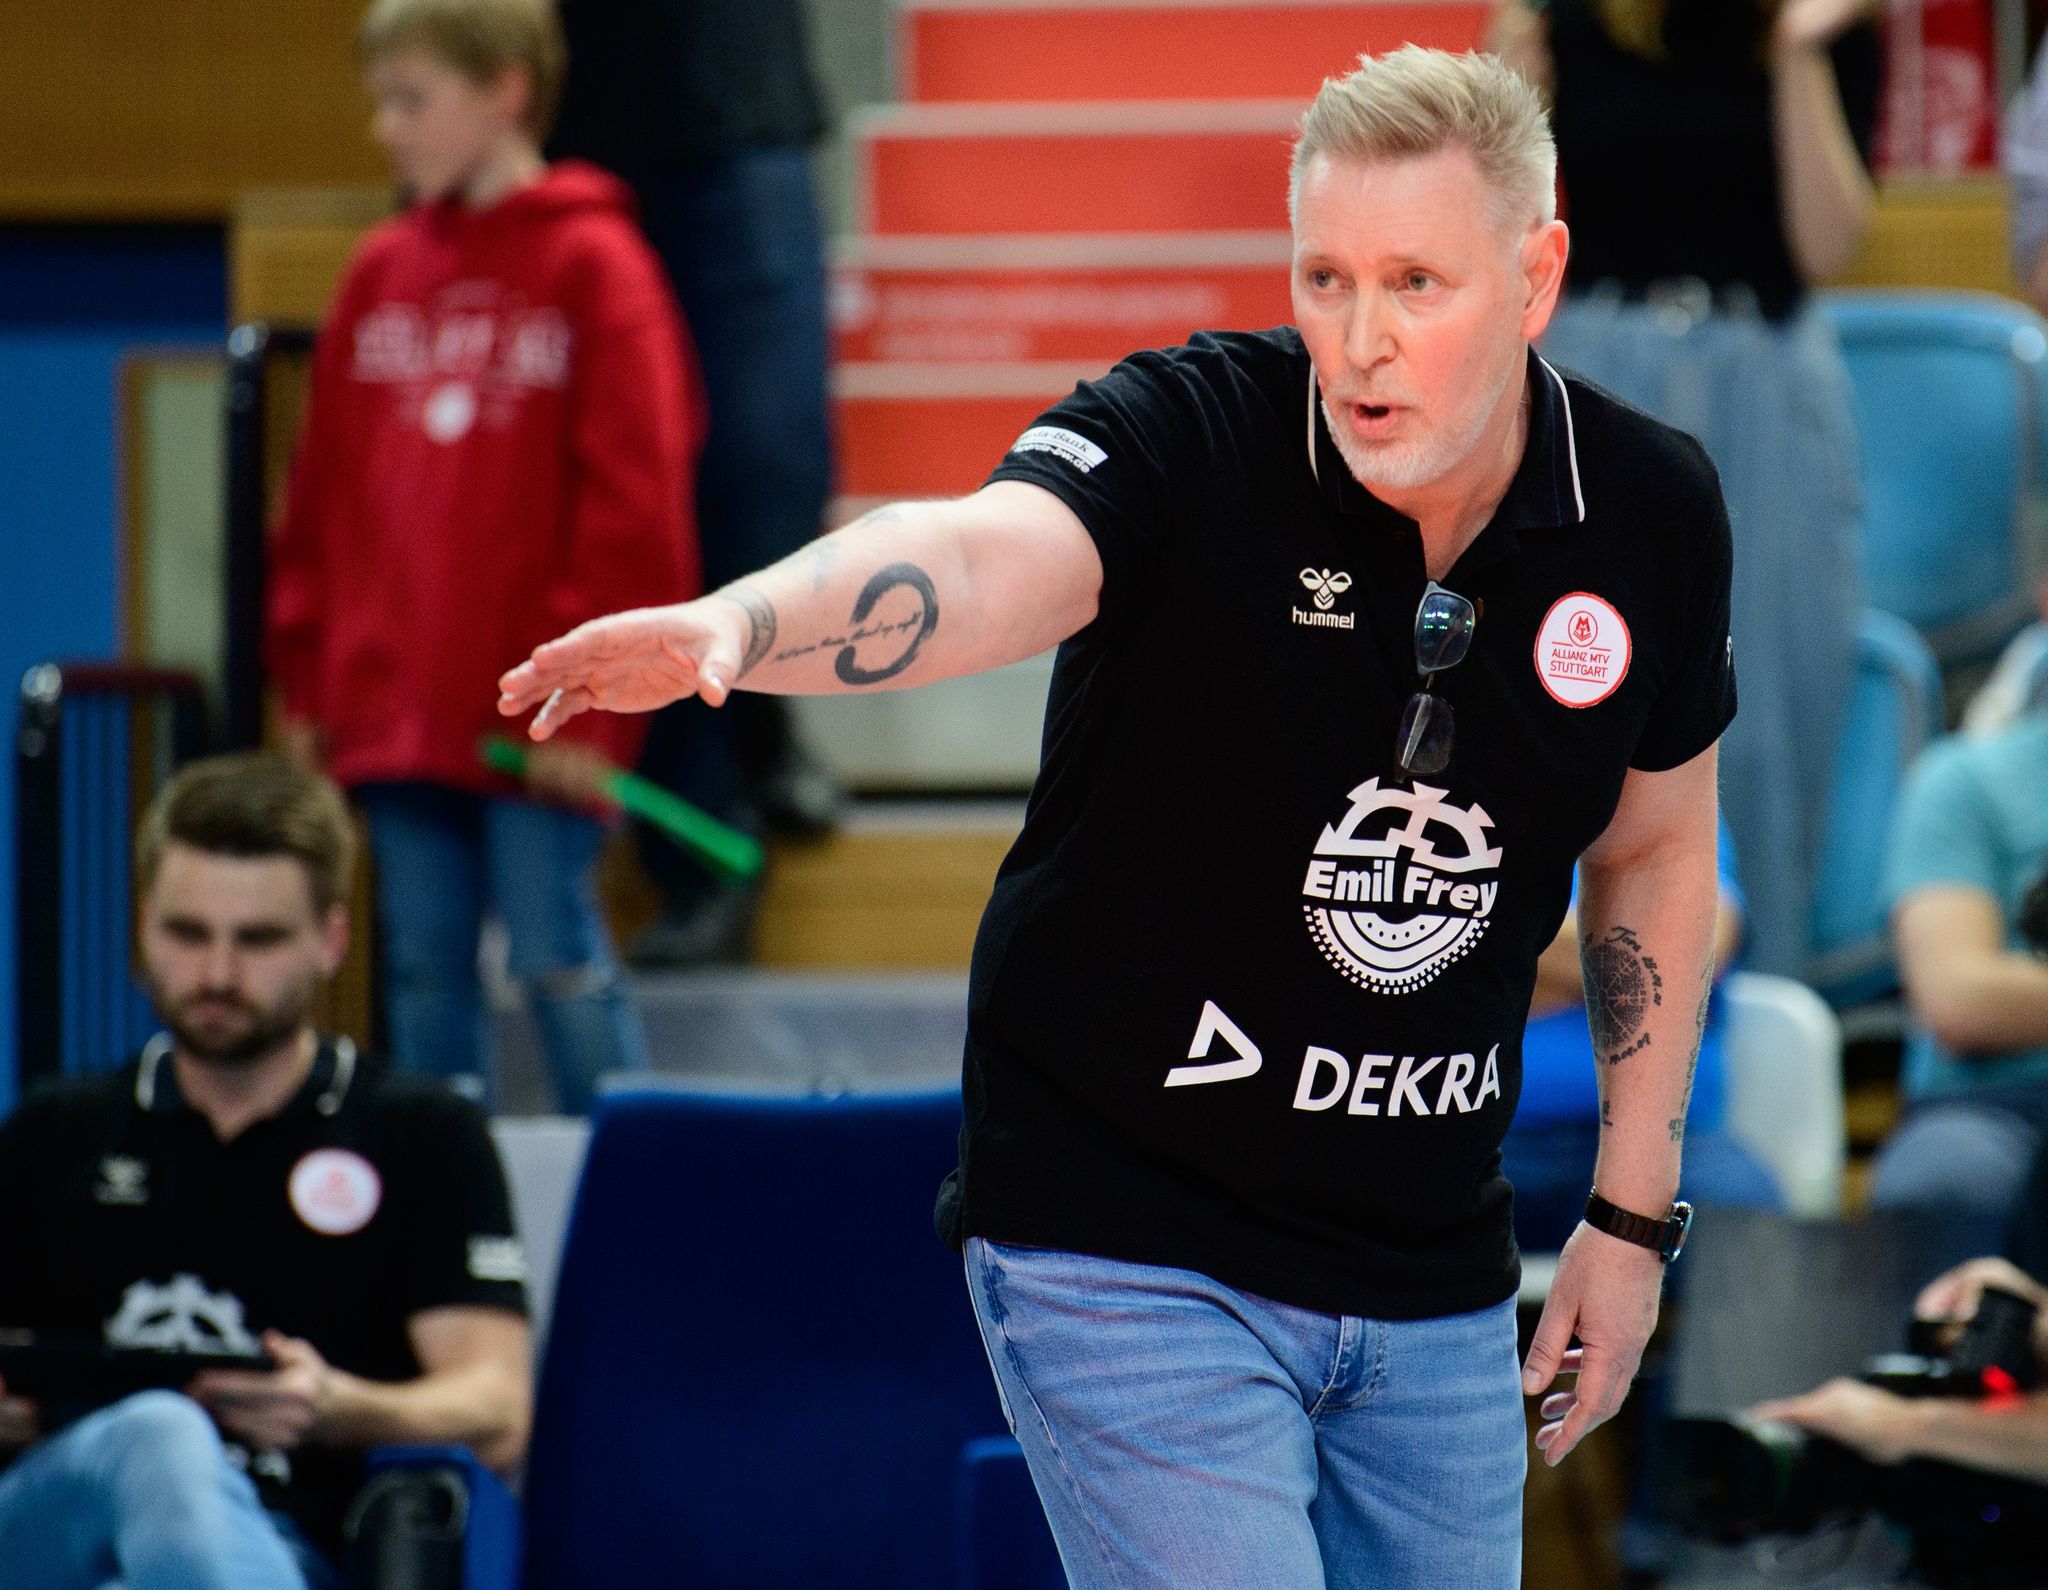 Volleyball-Trainer Tore Aleksandersen ist an Krebs erkrankt.